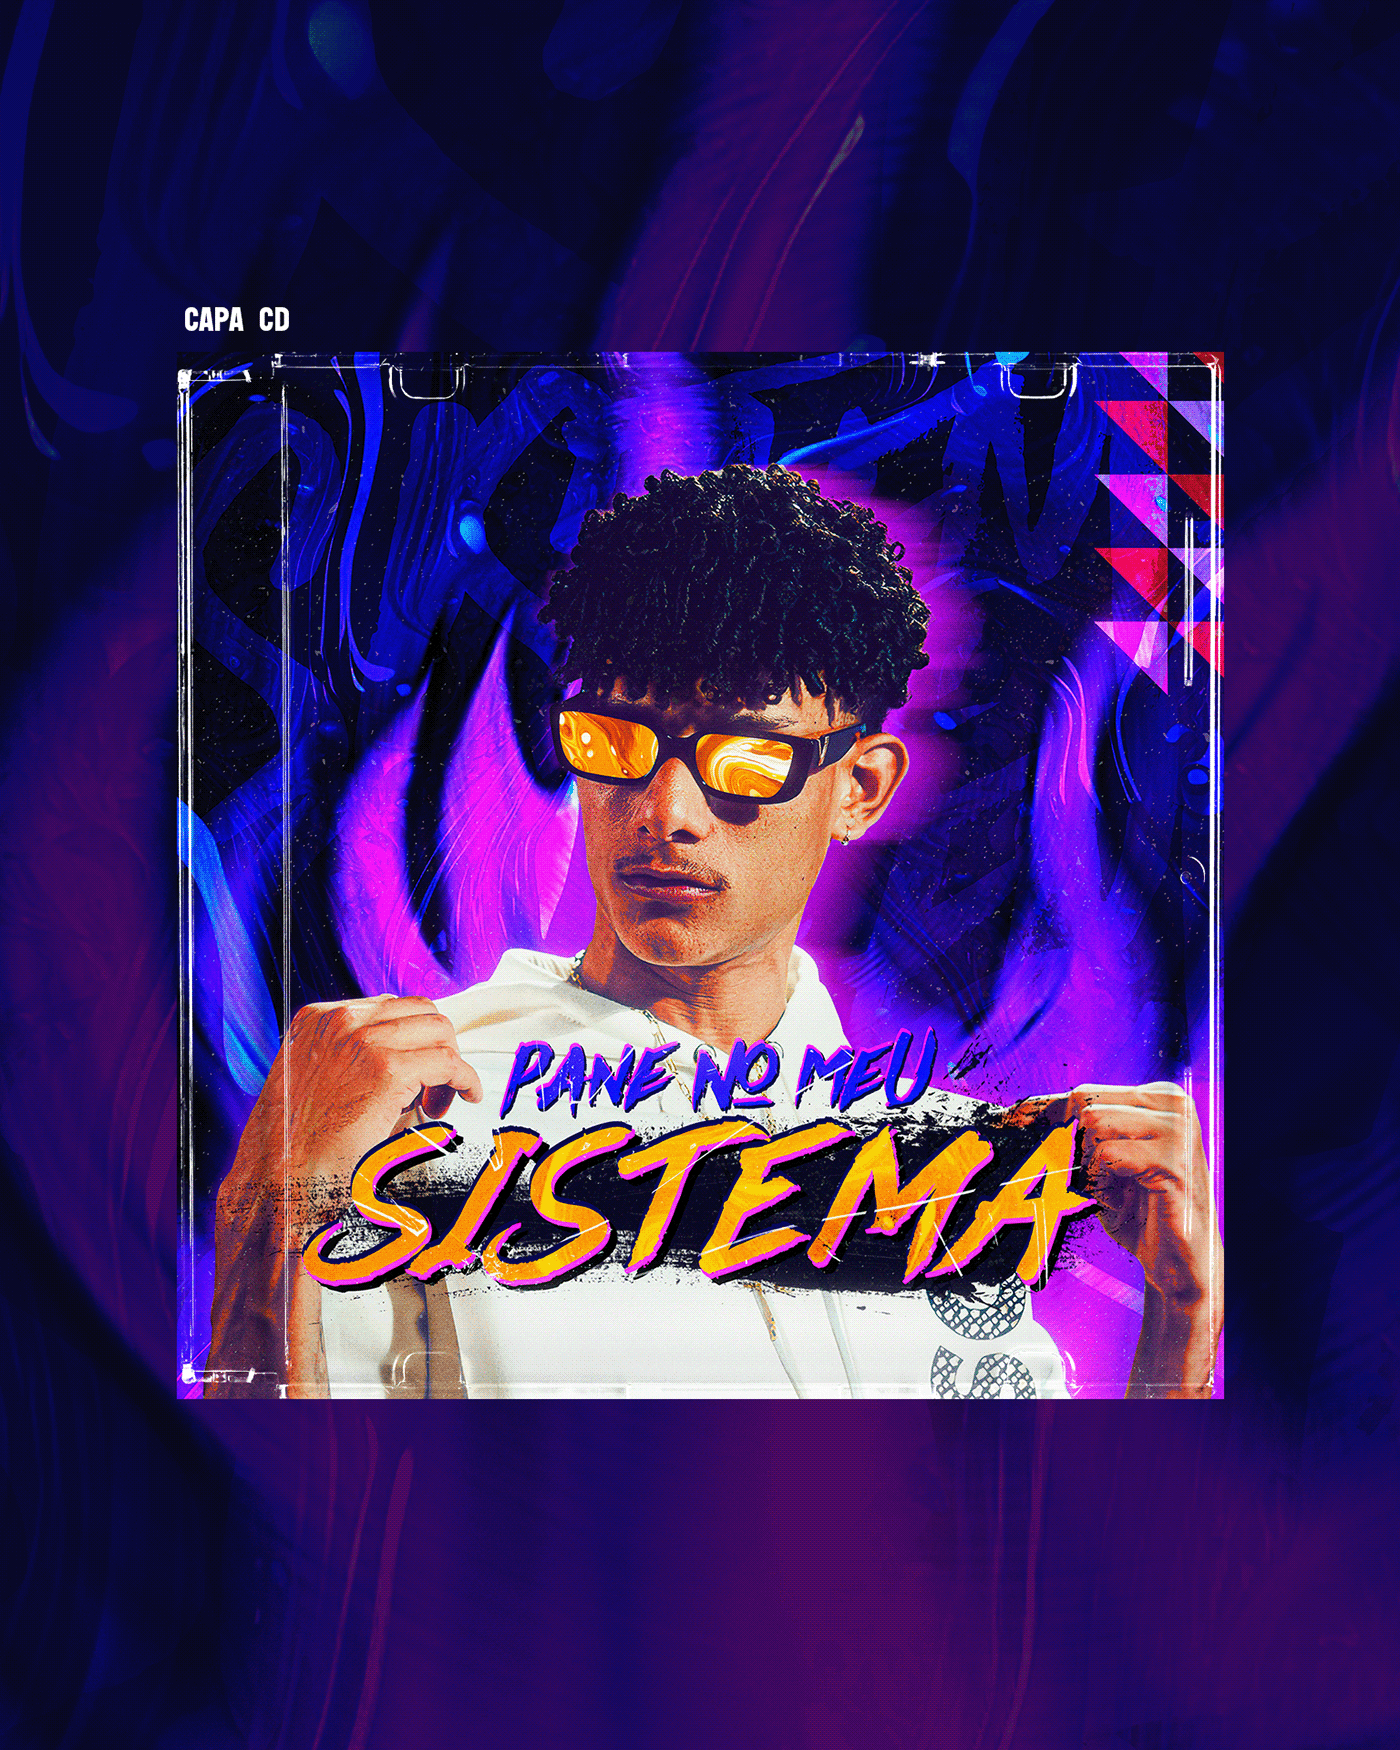 piseiro Lançamento Musical capa de Cd Artista artwork spotify CD design music trap suamusica